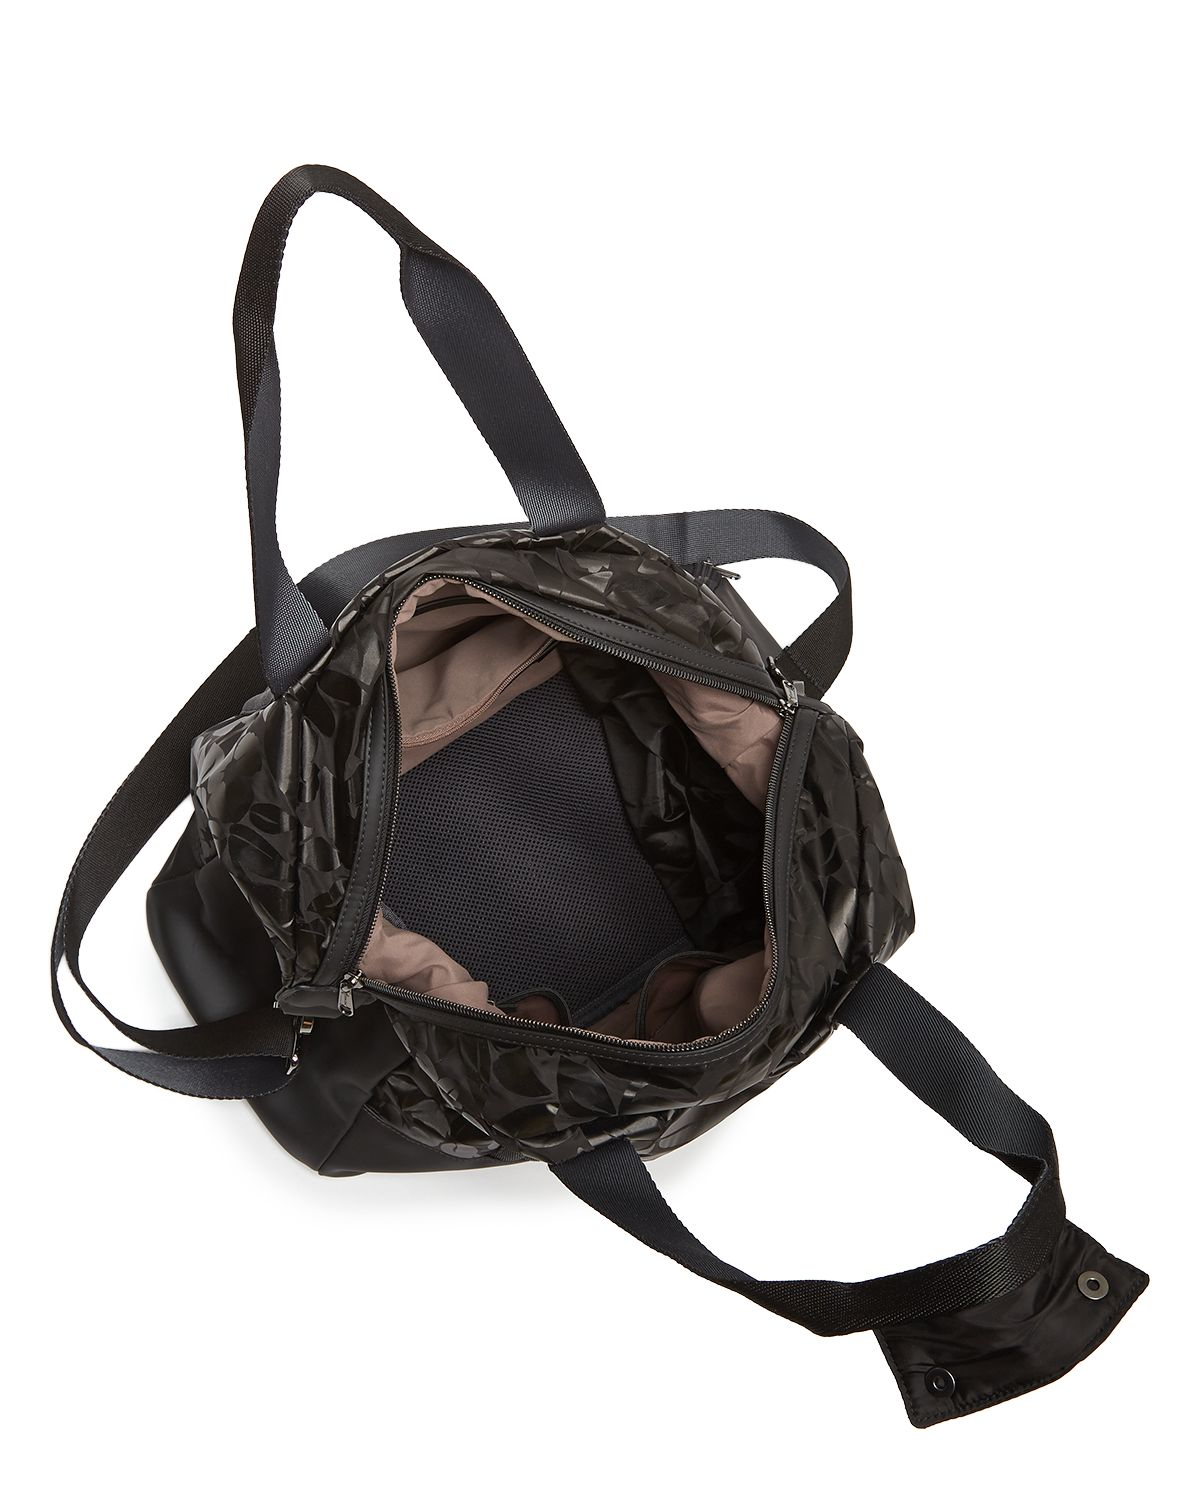 Adidas by stella mccartney Tote - Floral Small Gym Bag in Black | Lyst